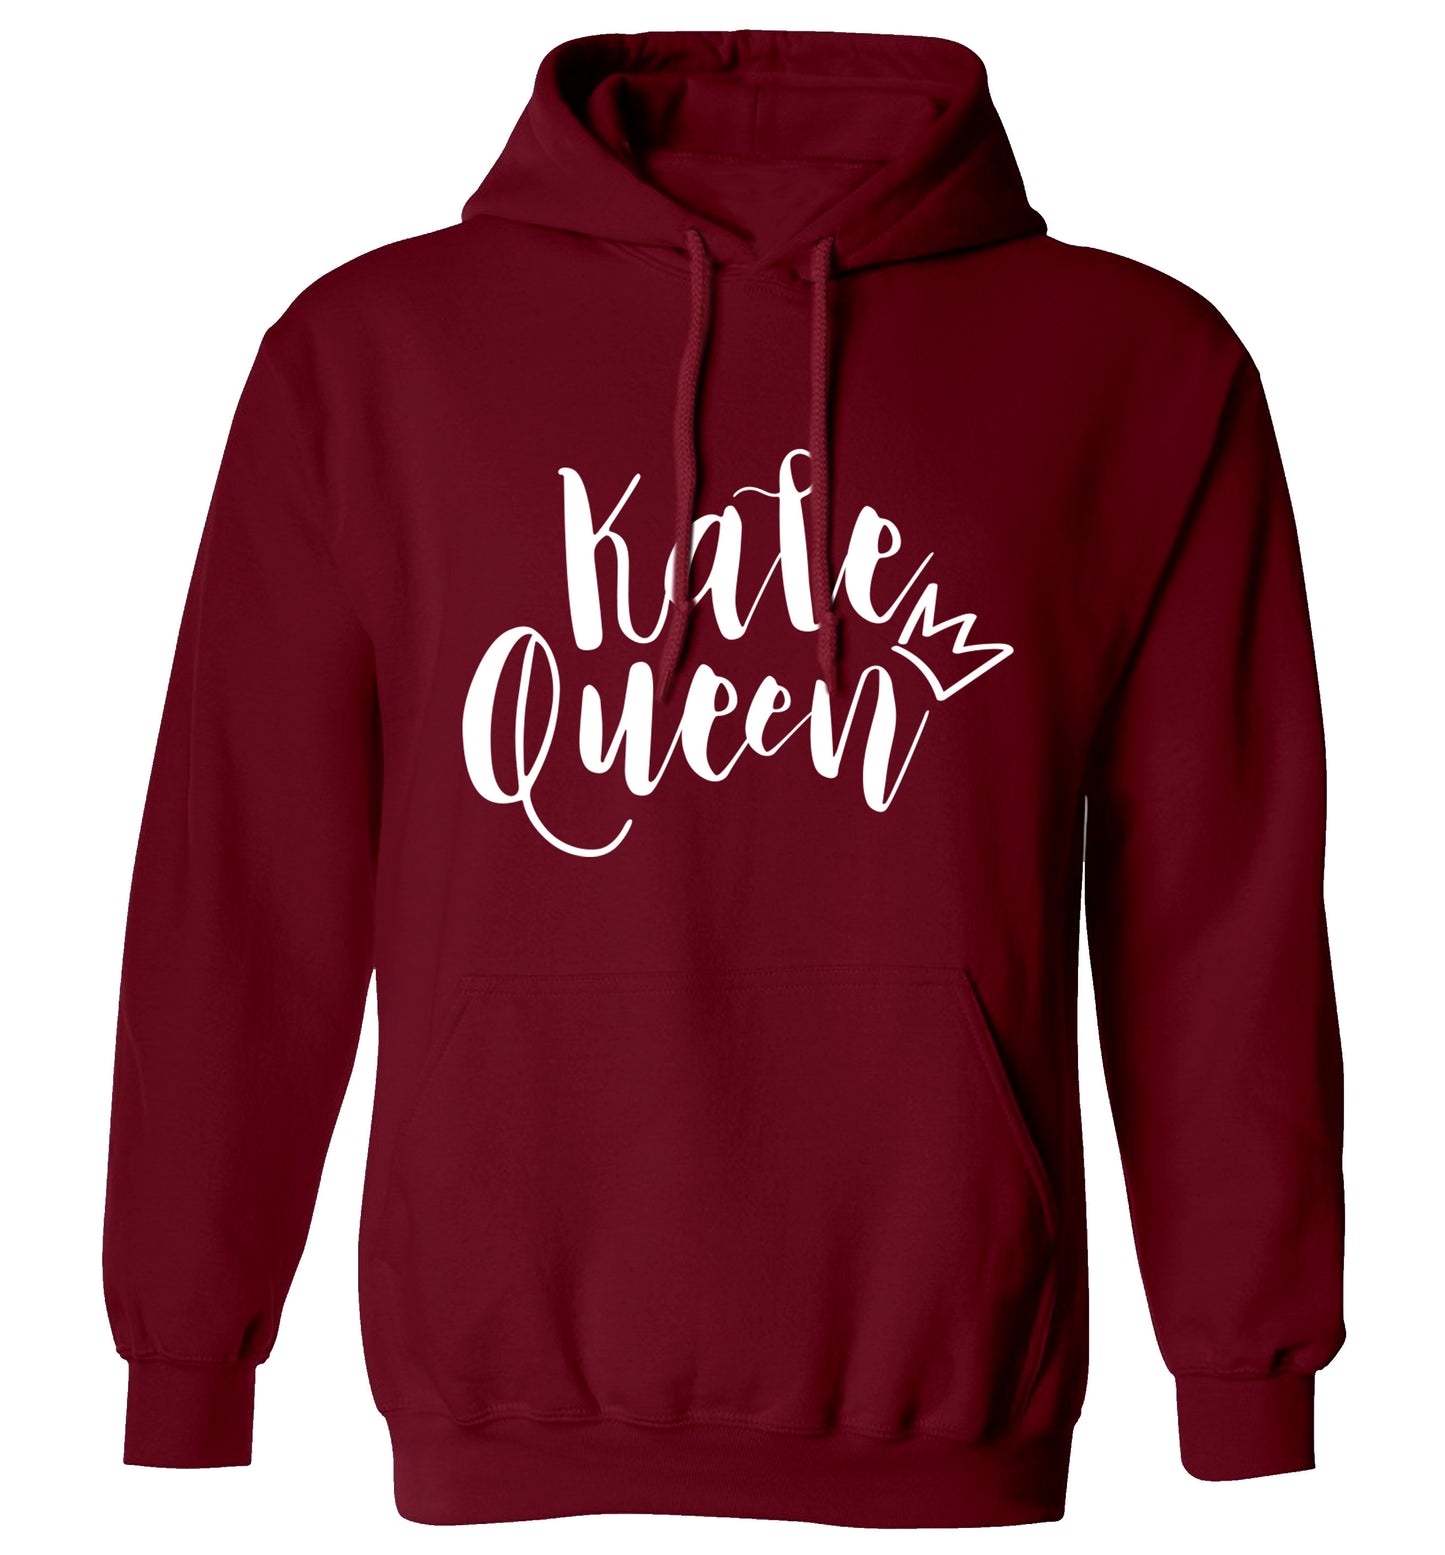 Kale Queen adults unisex maroon hoodie 2XL